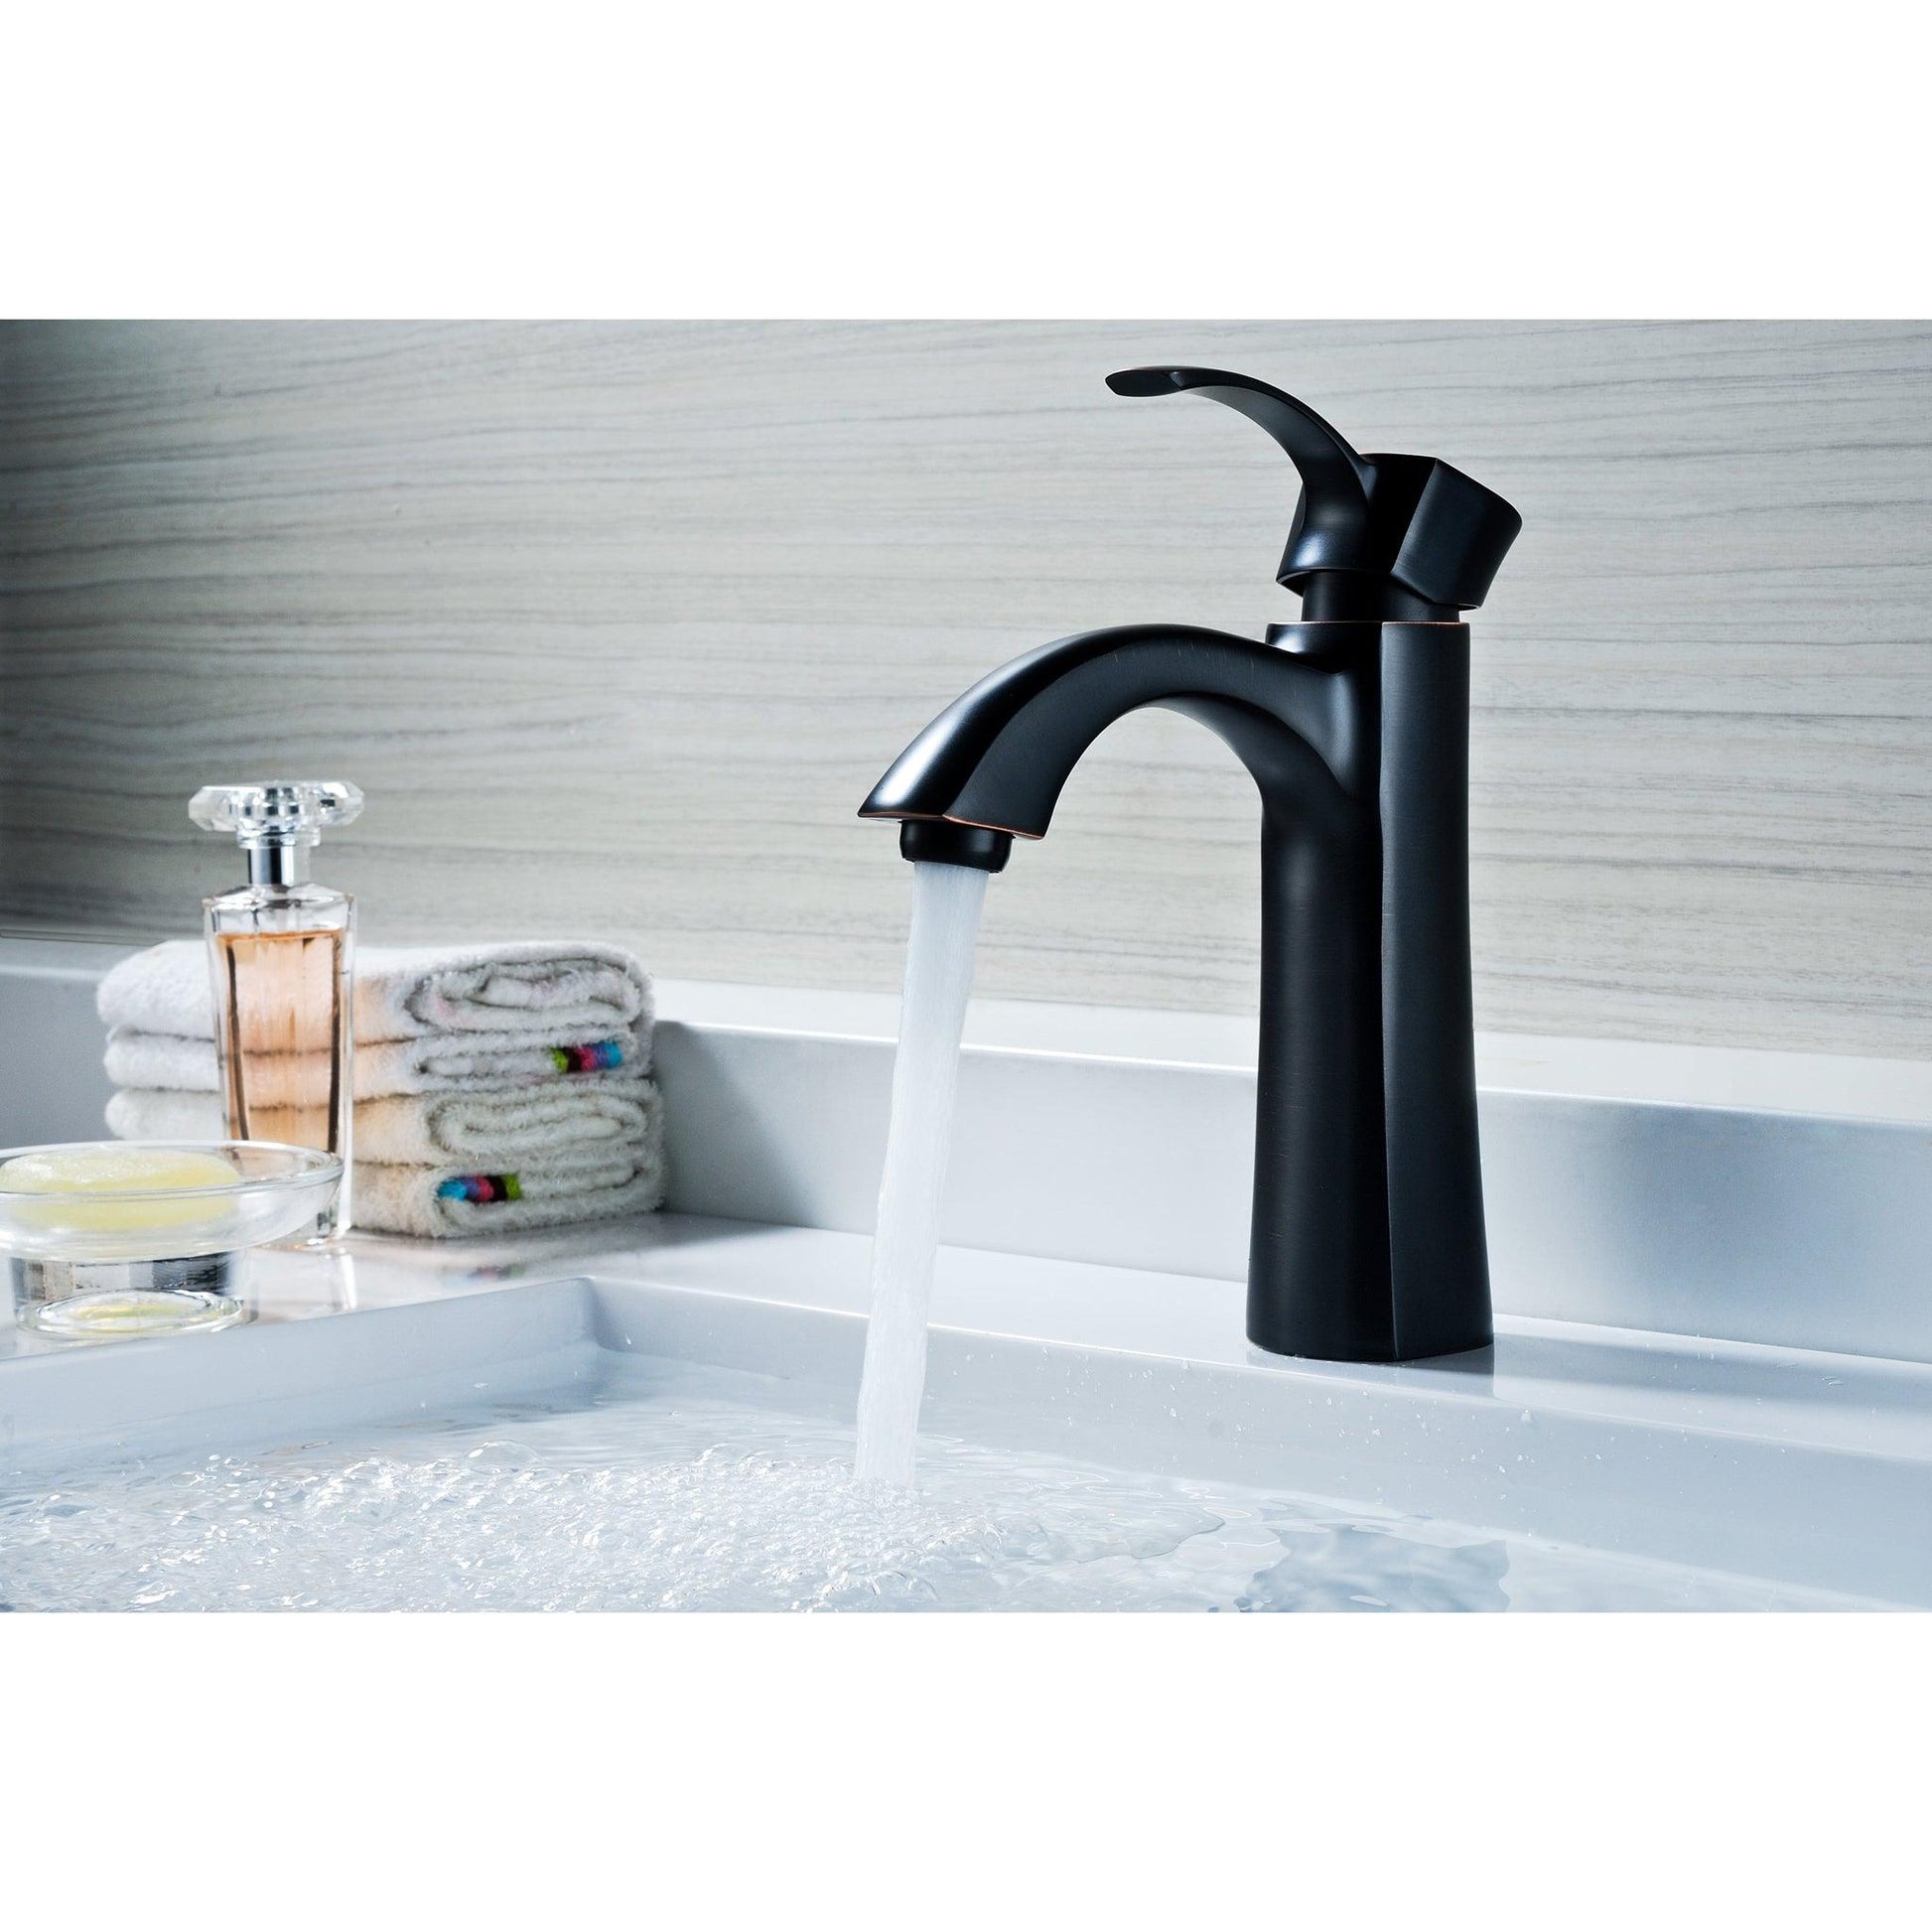 ANZZI Rhythm Series 5" Single Hole Oil Rubbed Bronze Mid-Arc Bathroom Sink Faucet